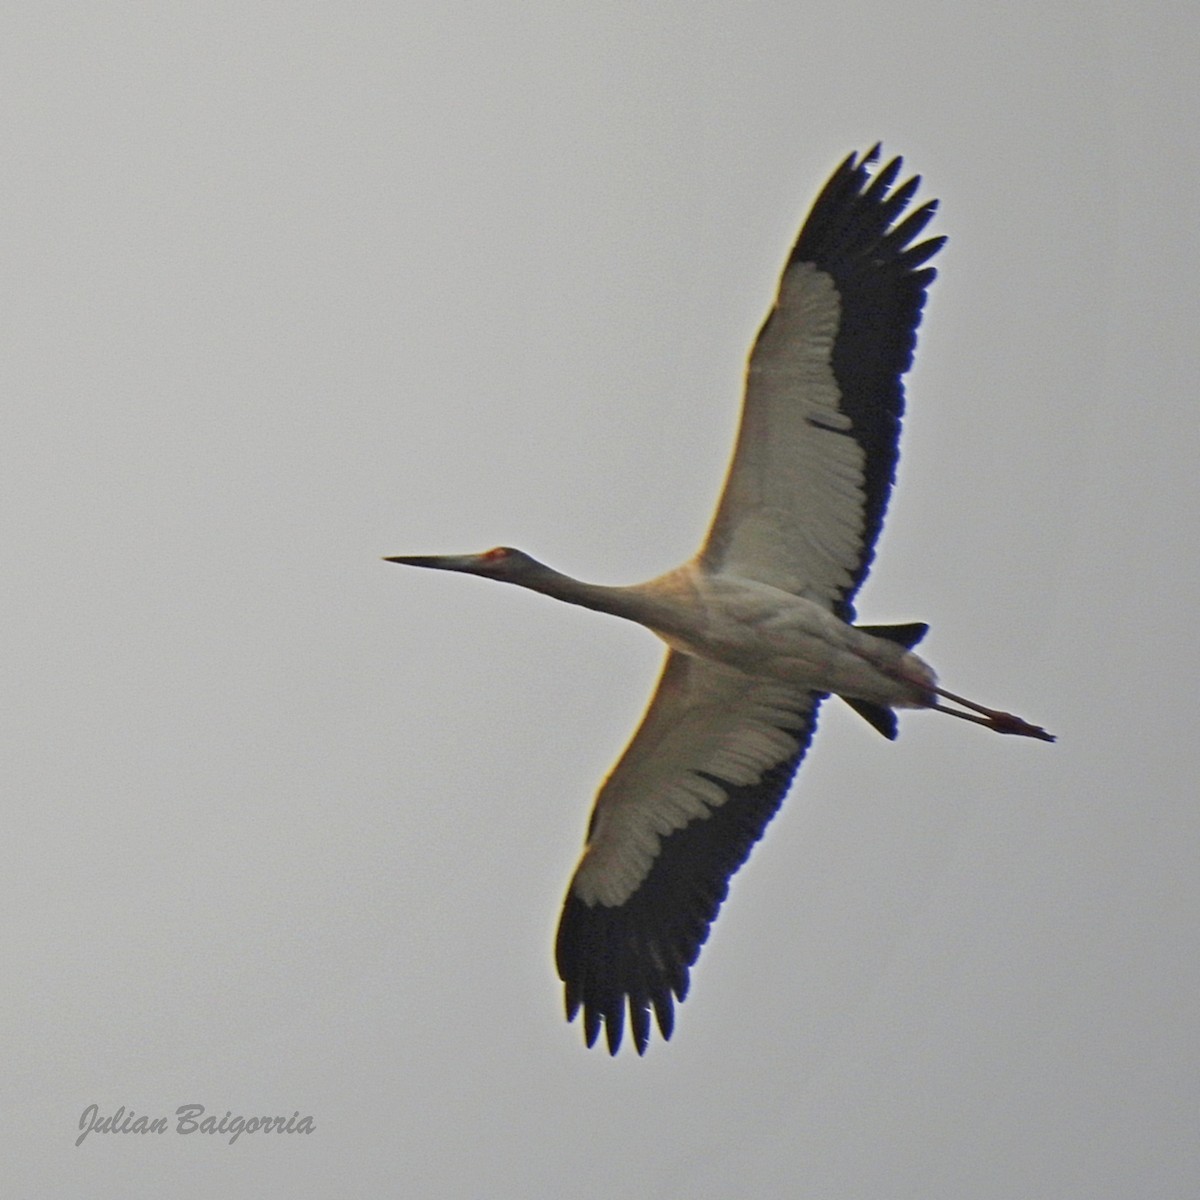 Maguari Stork - julian baigorria / Iguazú Birdwatching